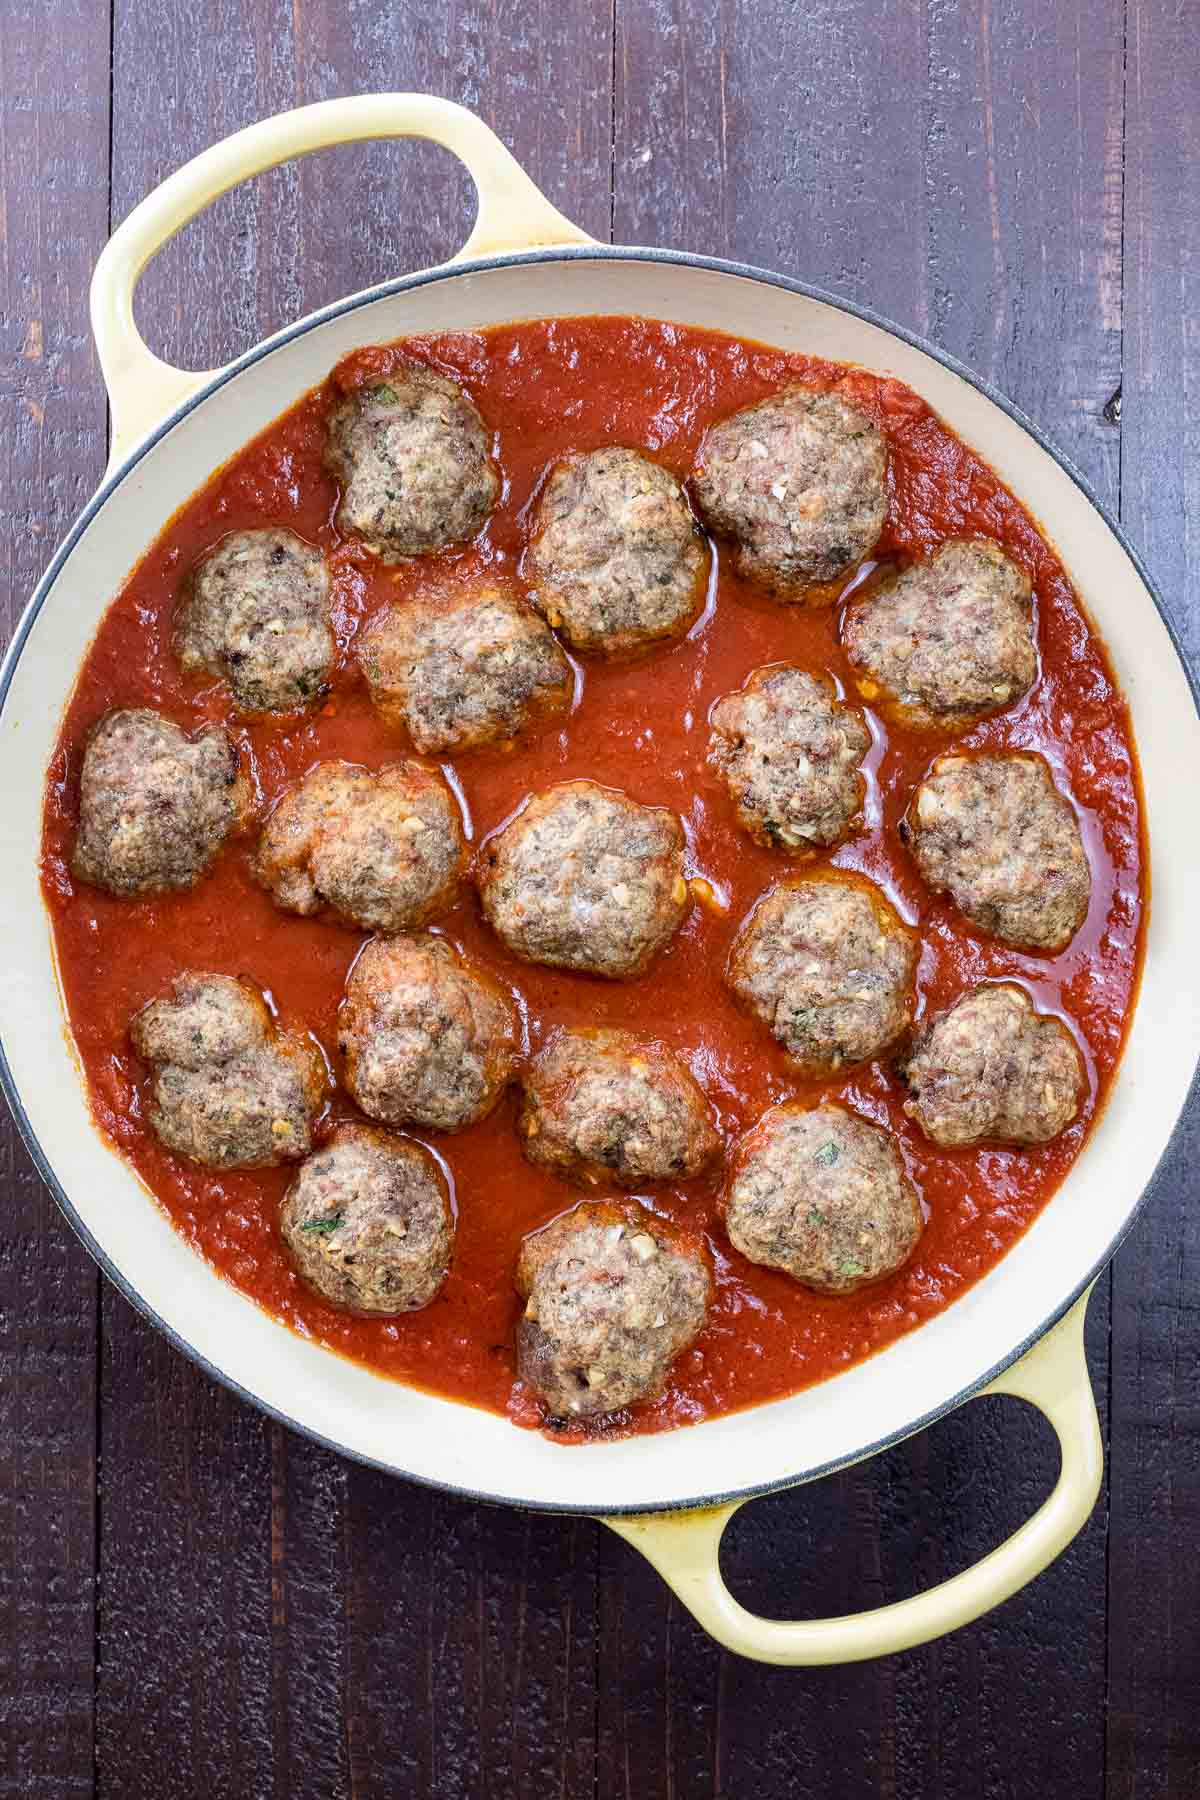 Grandma's Italian meatballs with tomato sauce in a pan